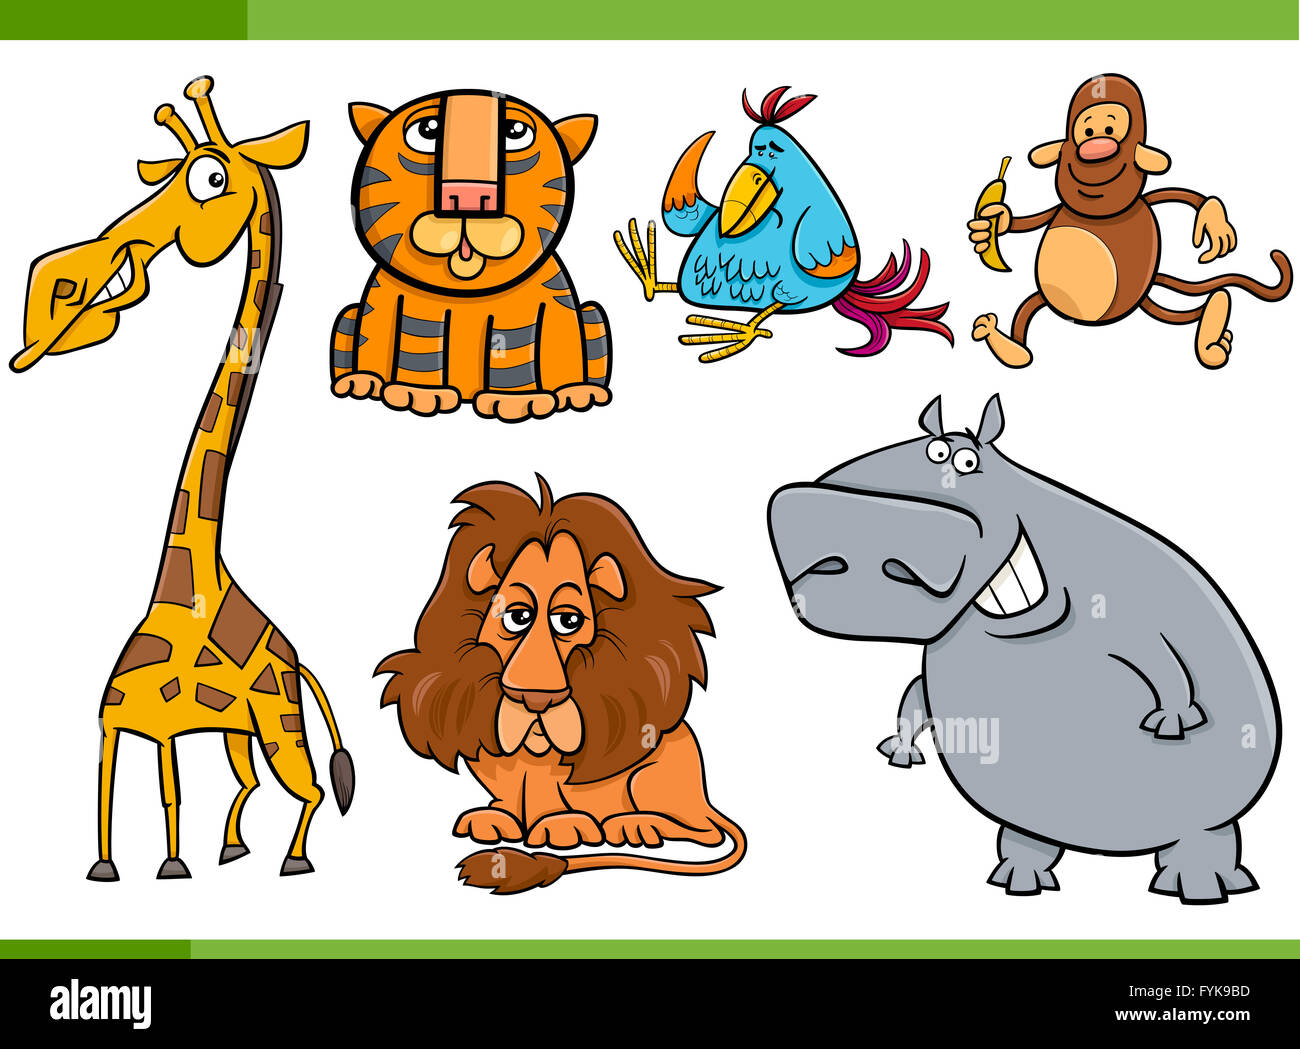 animals cartoon characters set Stock Photo